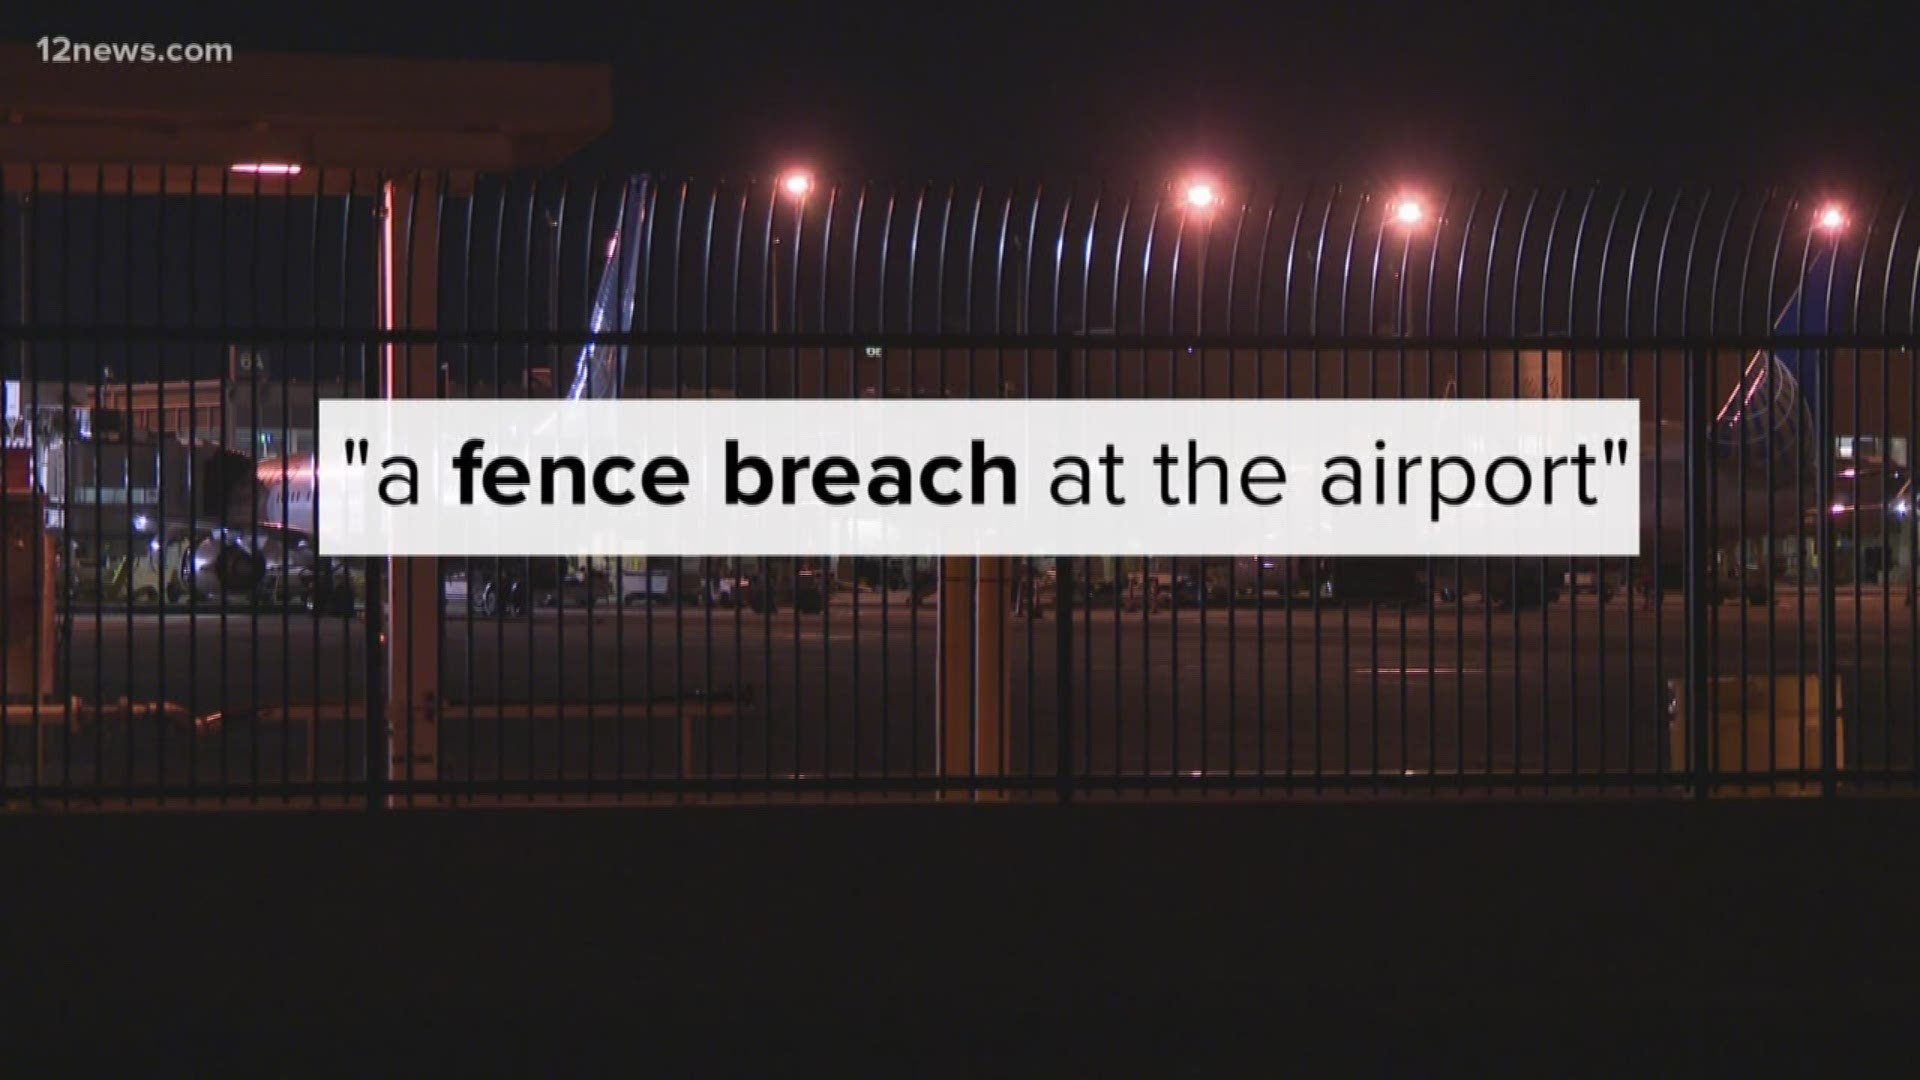 According to a TSA spokesperson, the incident "involved a fence breach at the airport, not involving a TSA checkpoint."